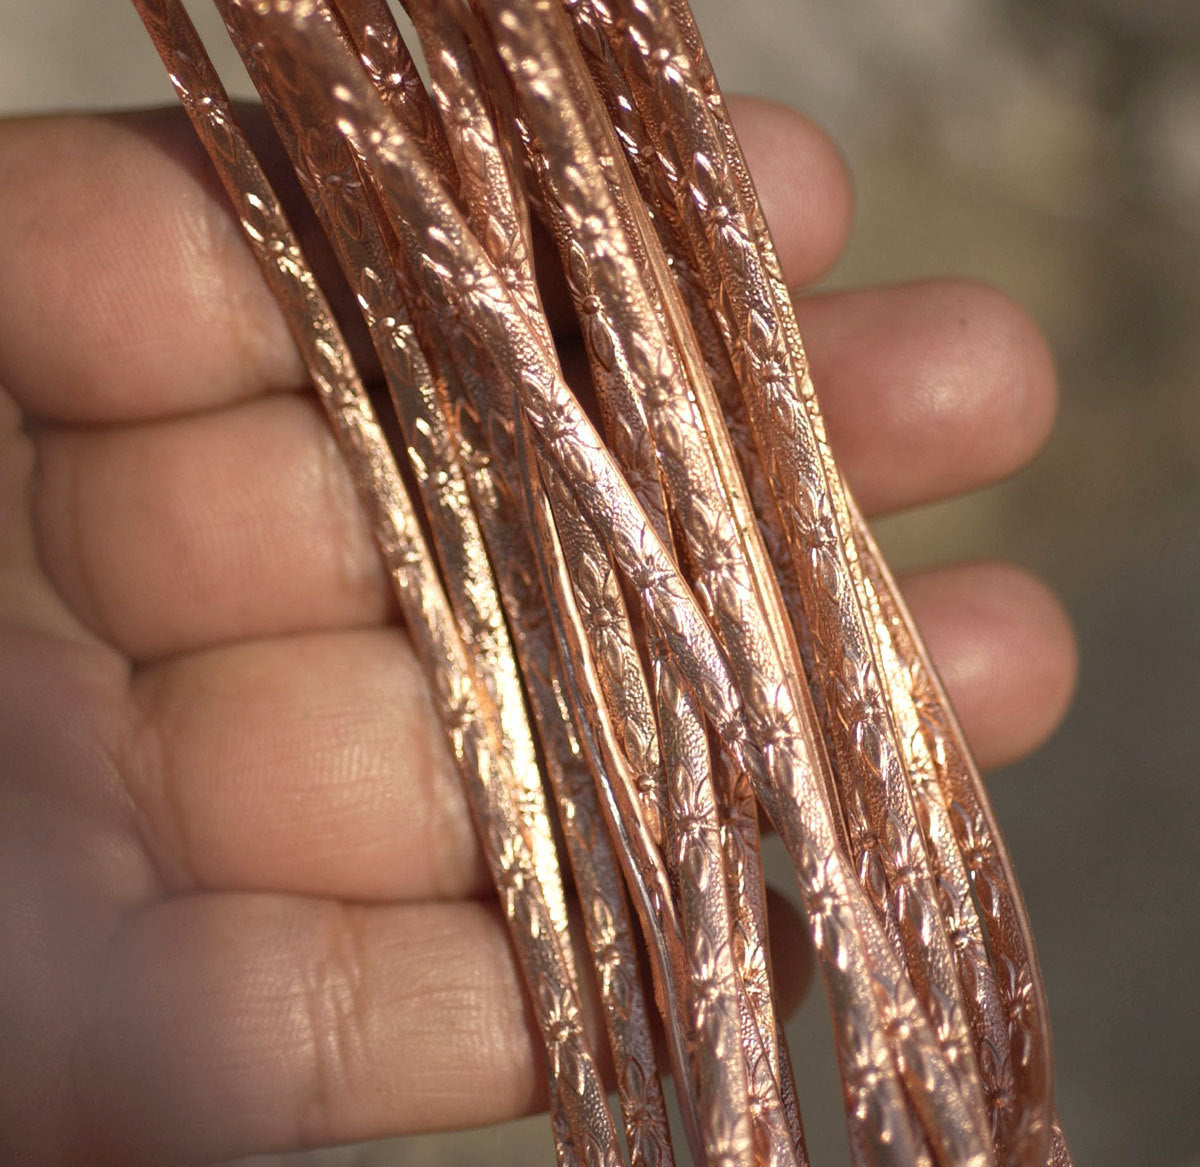 Copper Ring Stock Shank 3mm Burst Flower Textured Metal Cane Wire - Rings Bracelets Pendants Metalwork